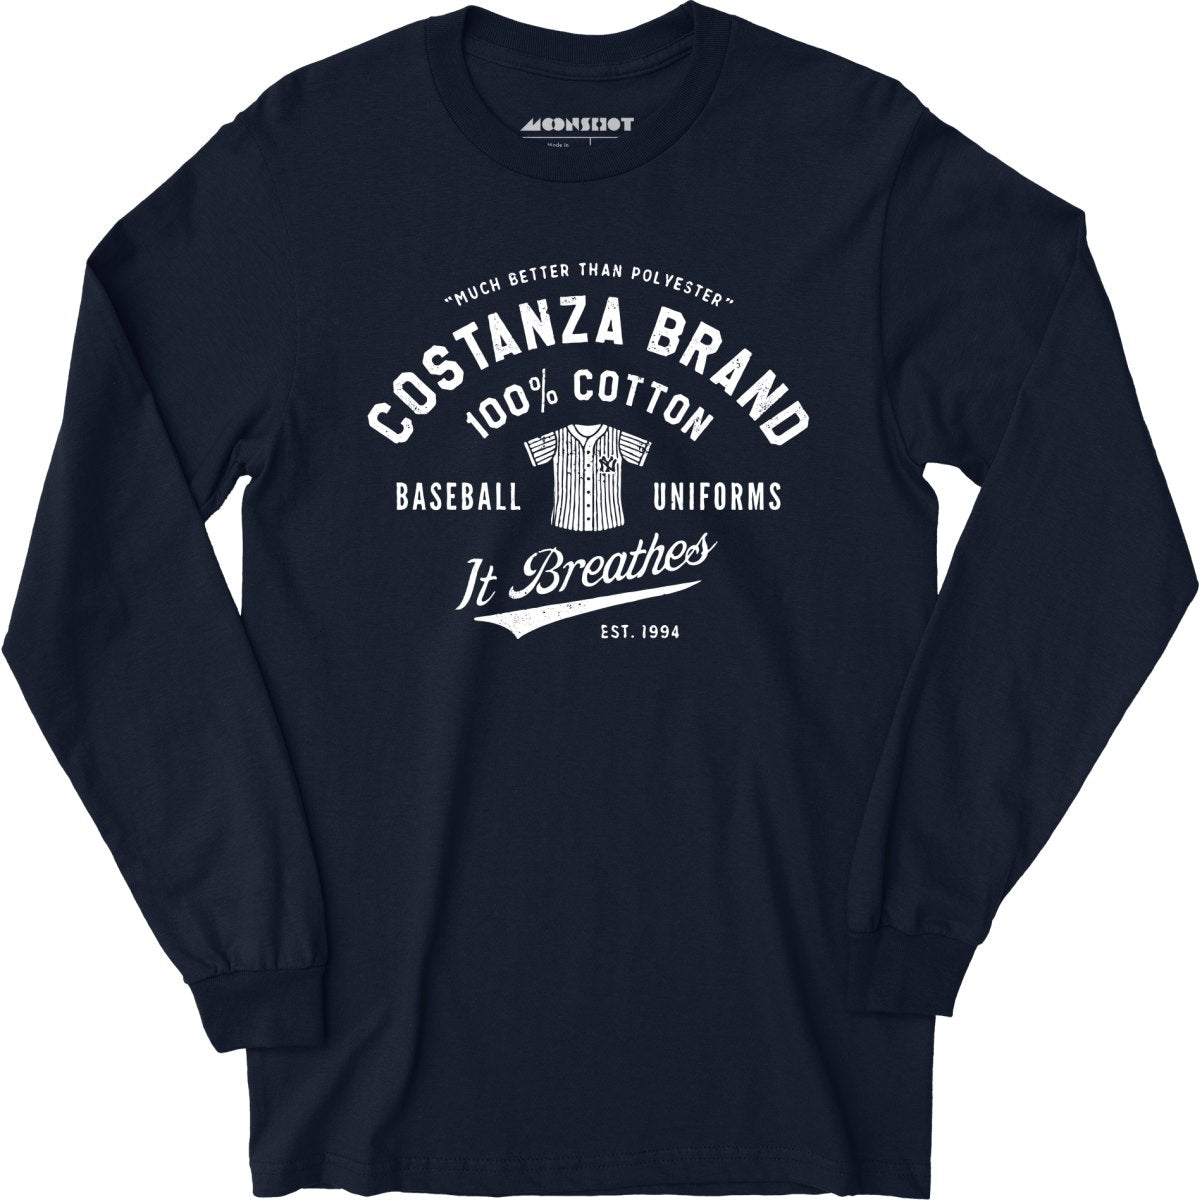 Costanza Brand Cotton Baseball Uniforms - Long Sleeve T-Shirt